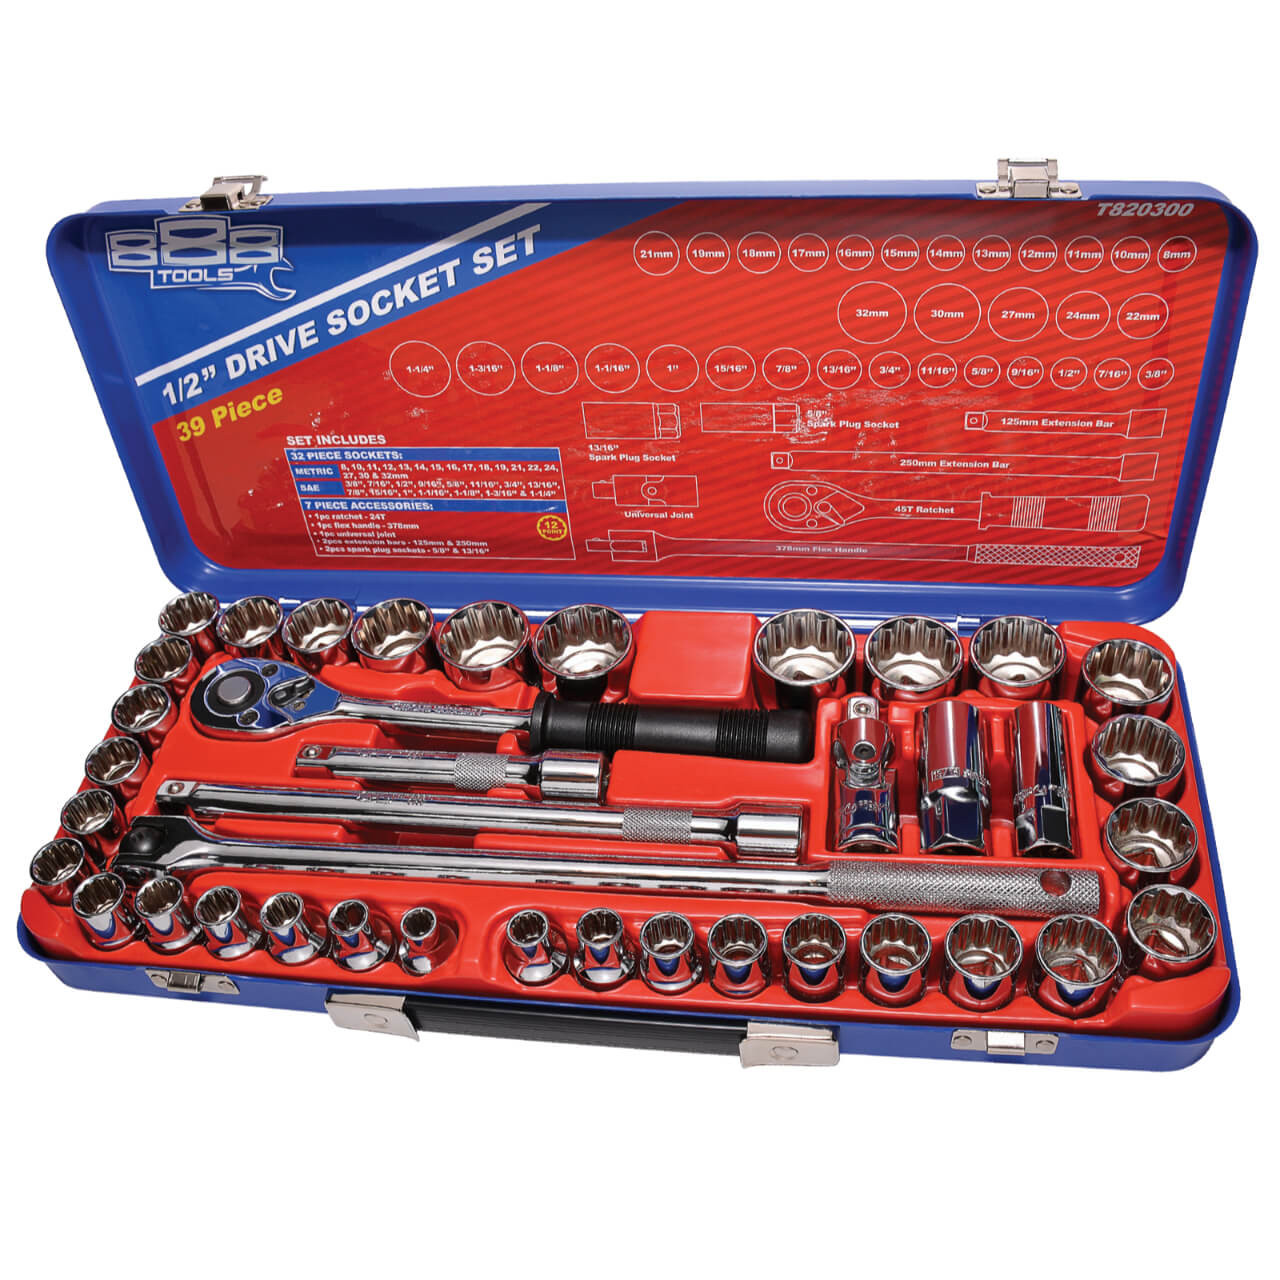 888 Tools 1/2 Dr 12pt Socket Set Metric & Imperial 39pce